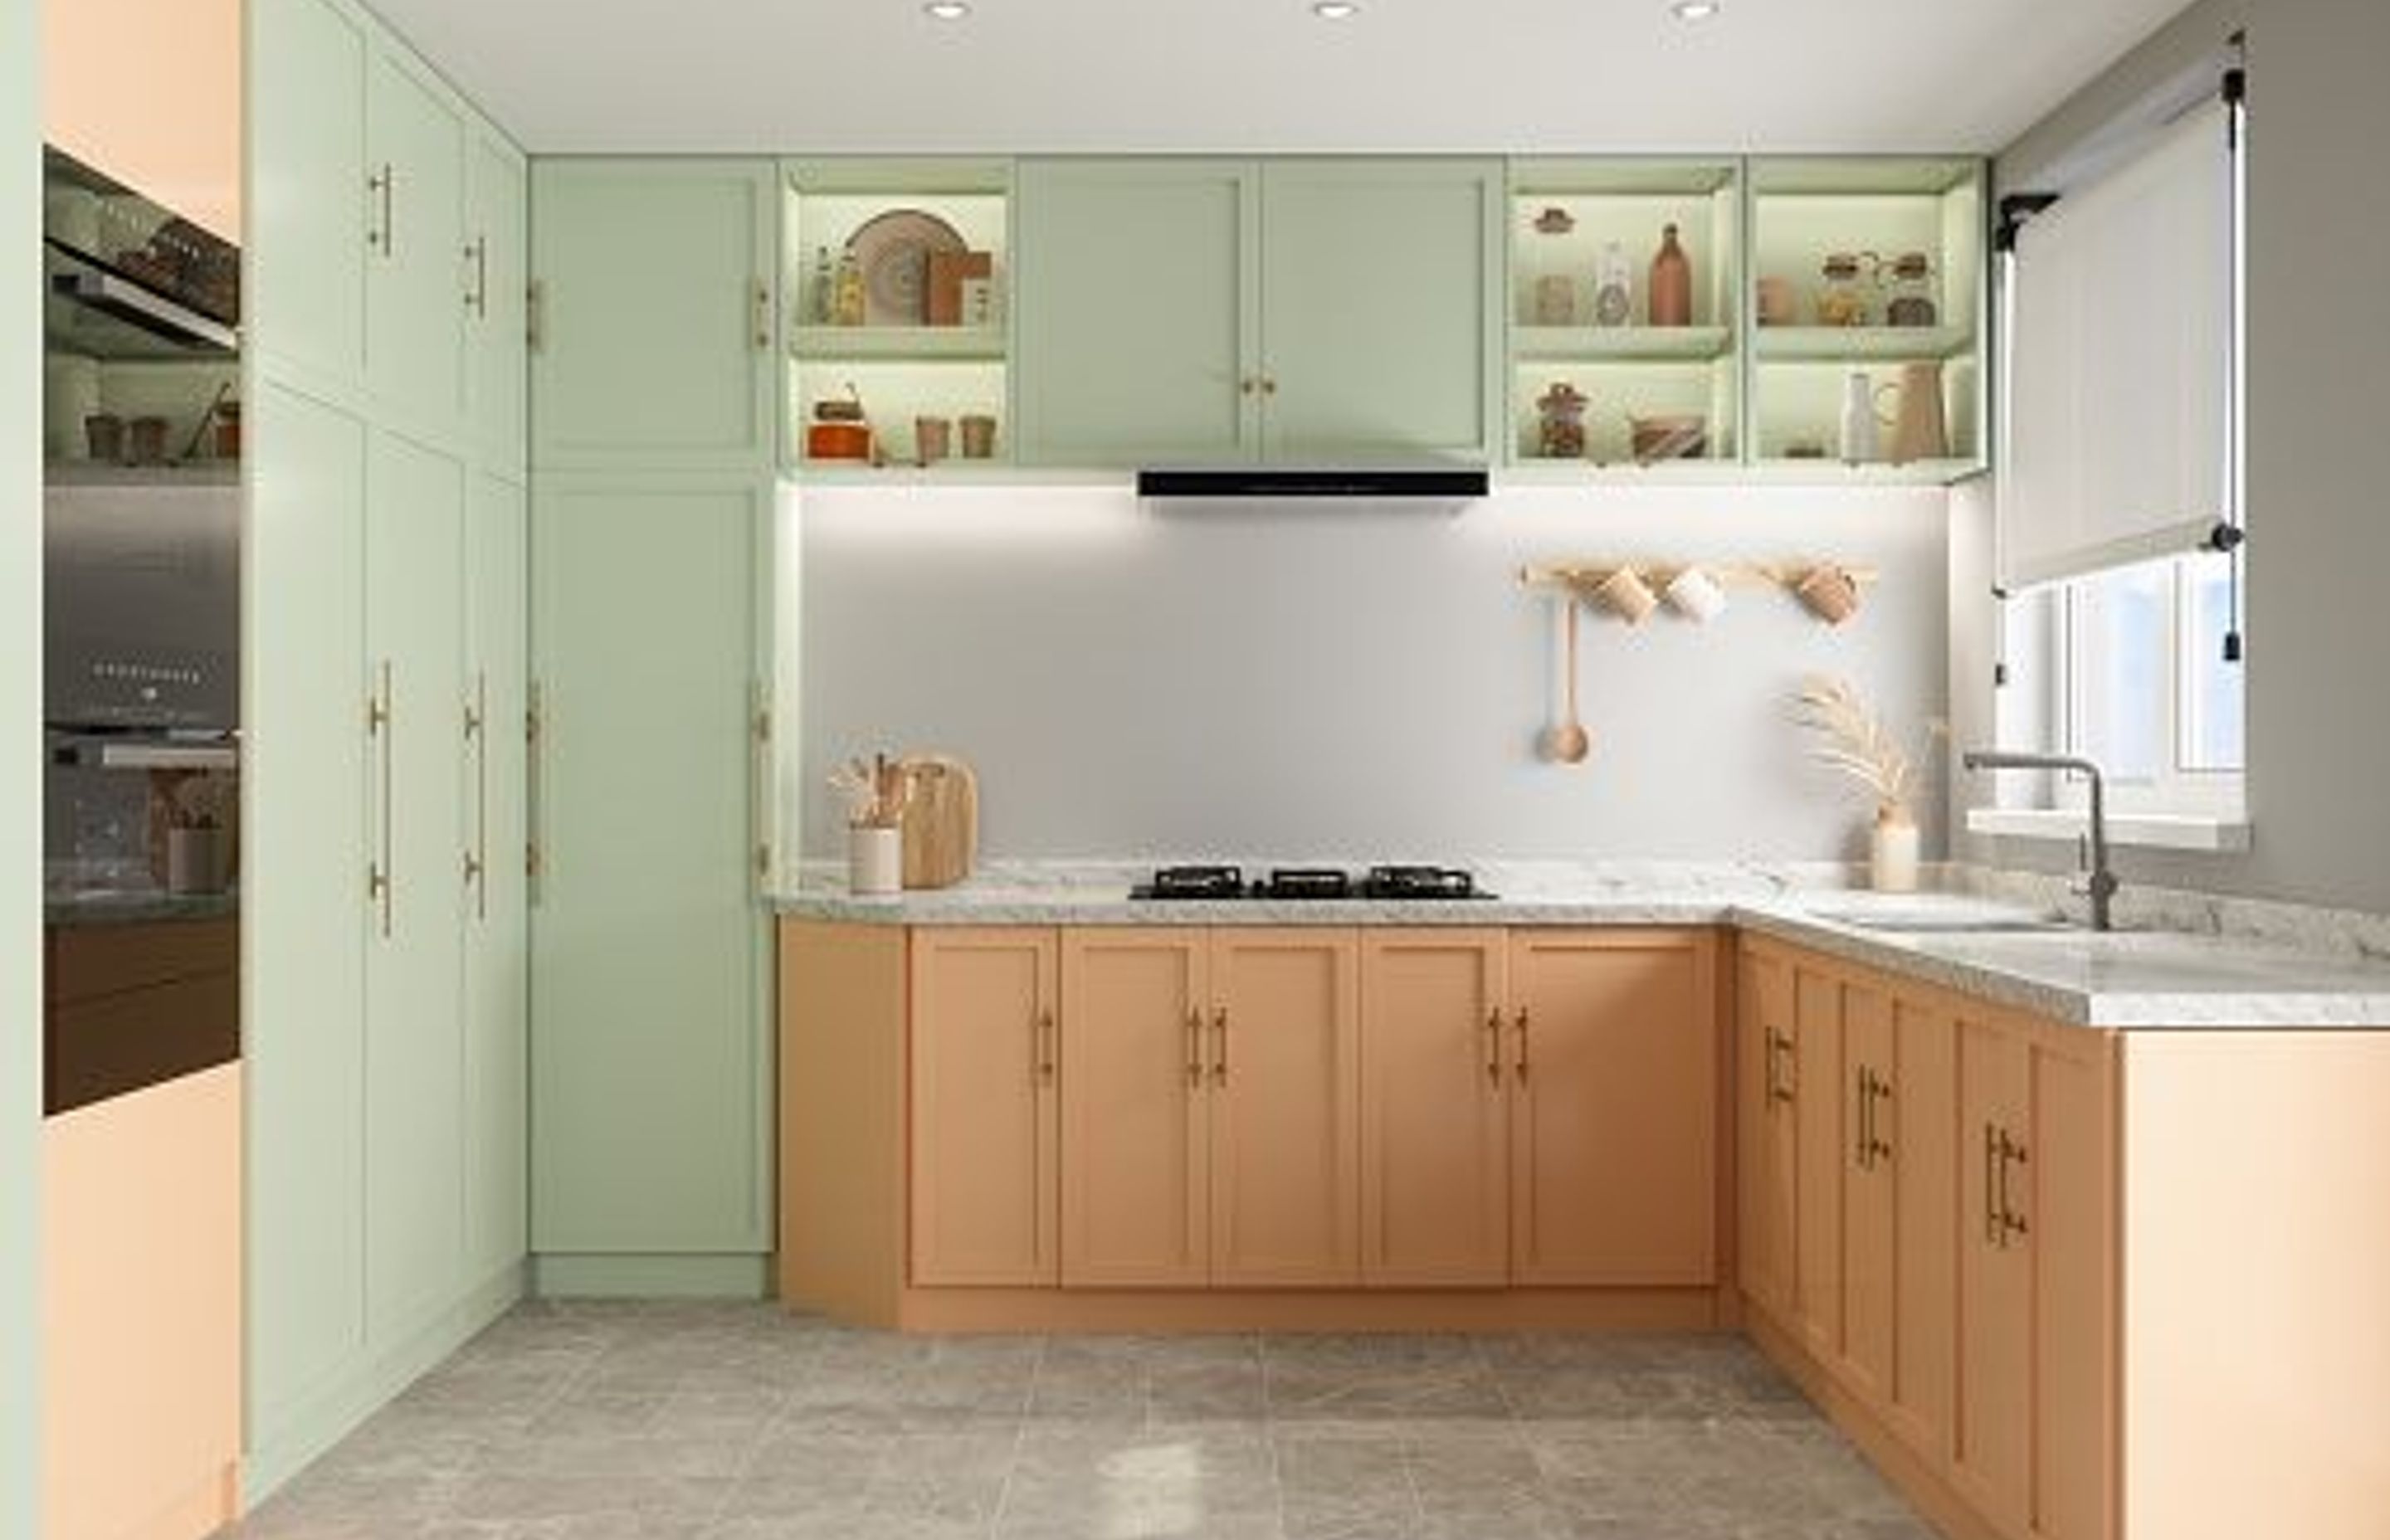 Colourful Kitchen Cabinets | Photo Credit - iStock